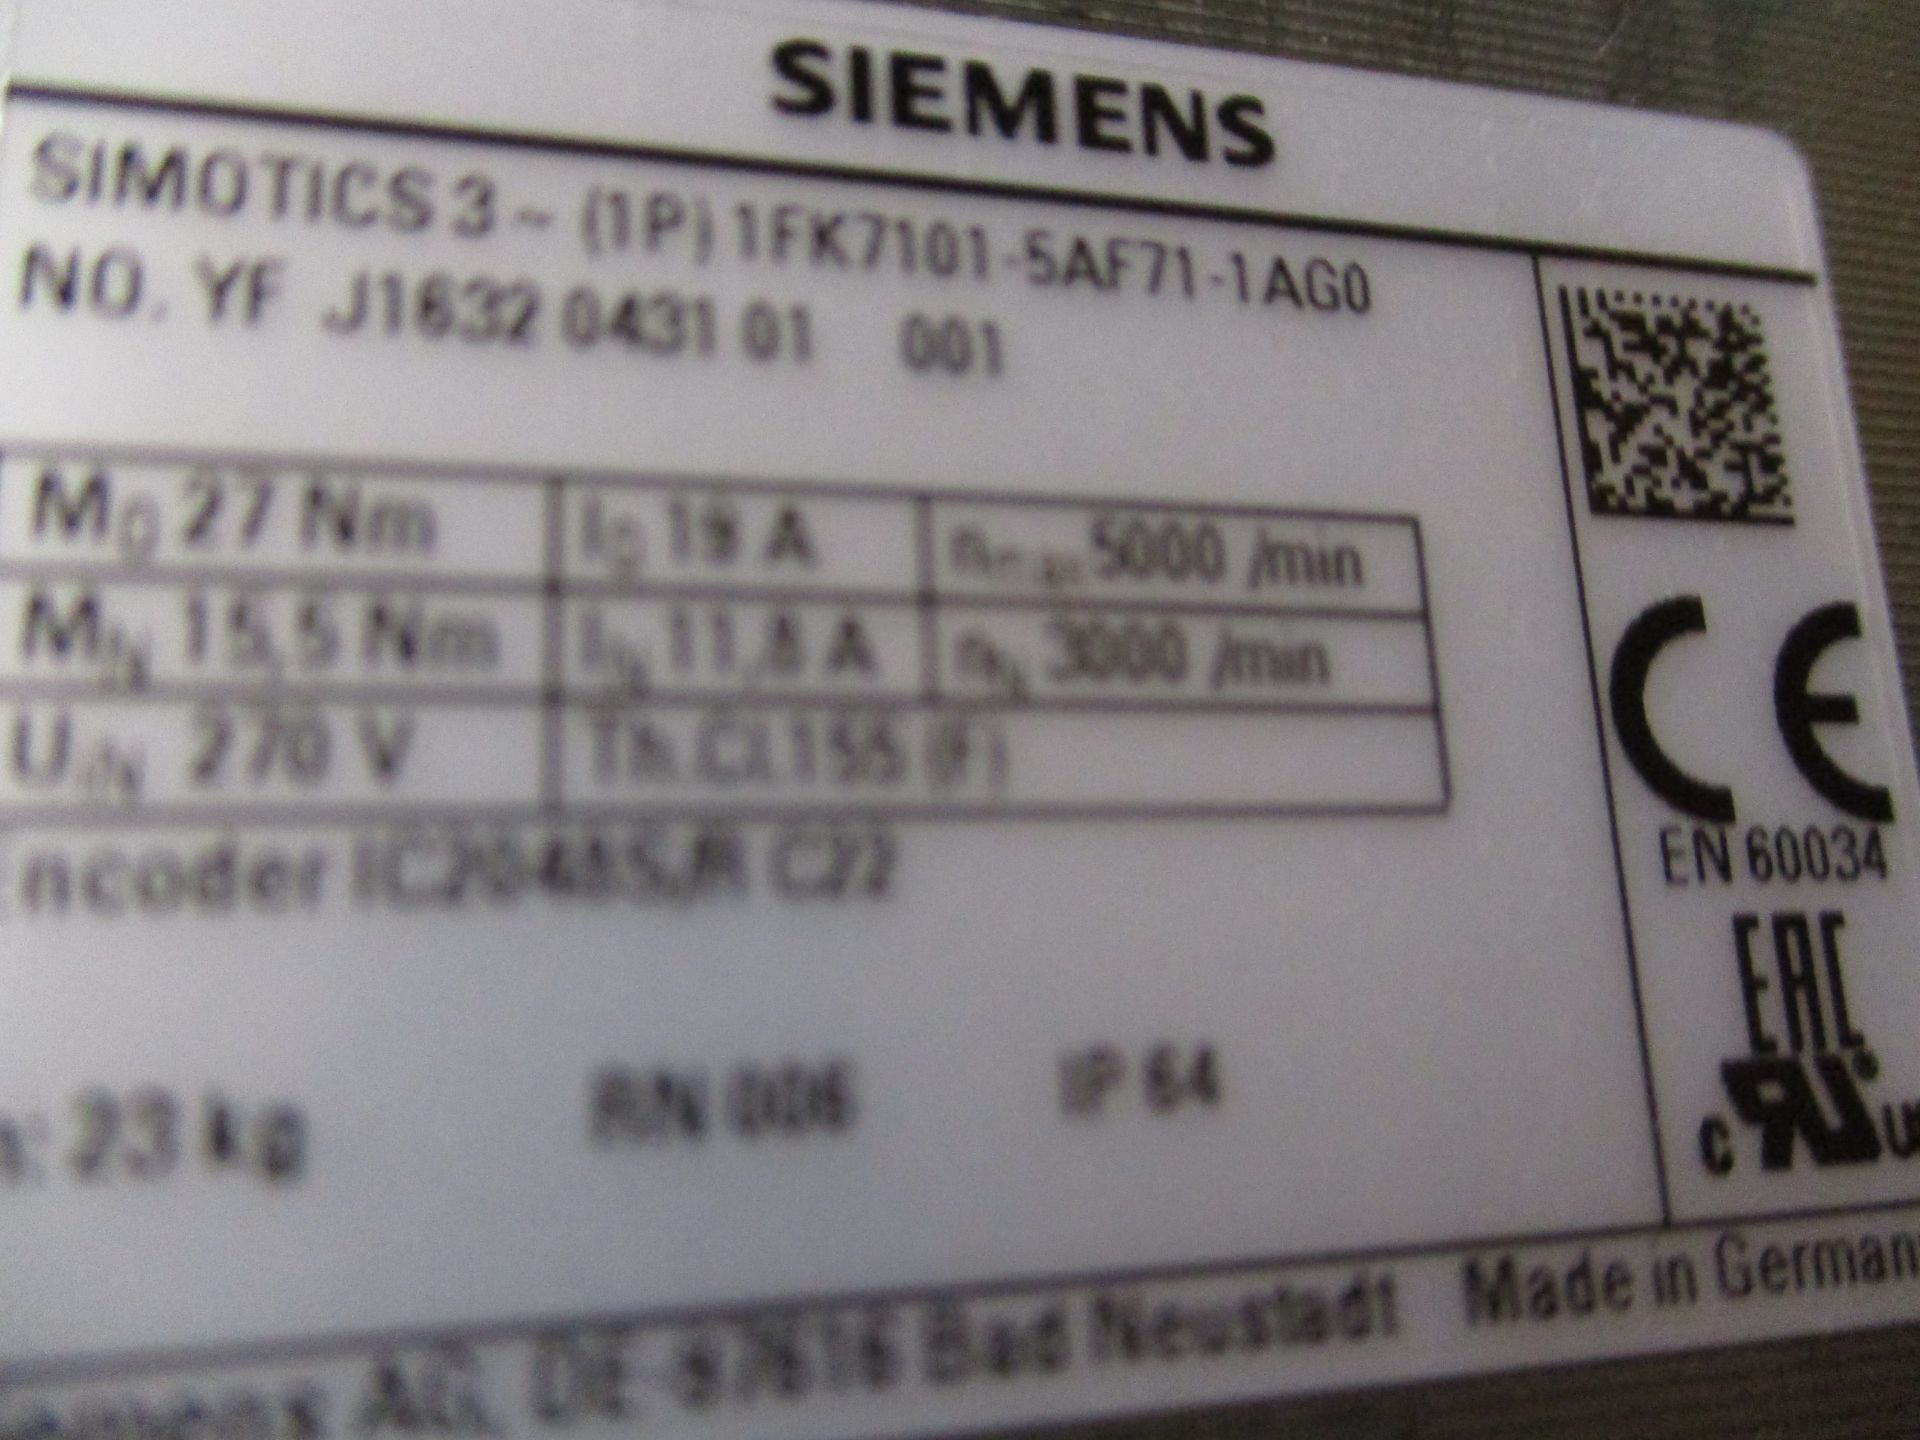 Siemens Simotics 3 - (IP) 1FK7101-5AF7HAGO Motor - Image 3 of 3